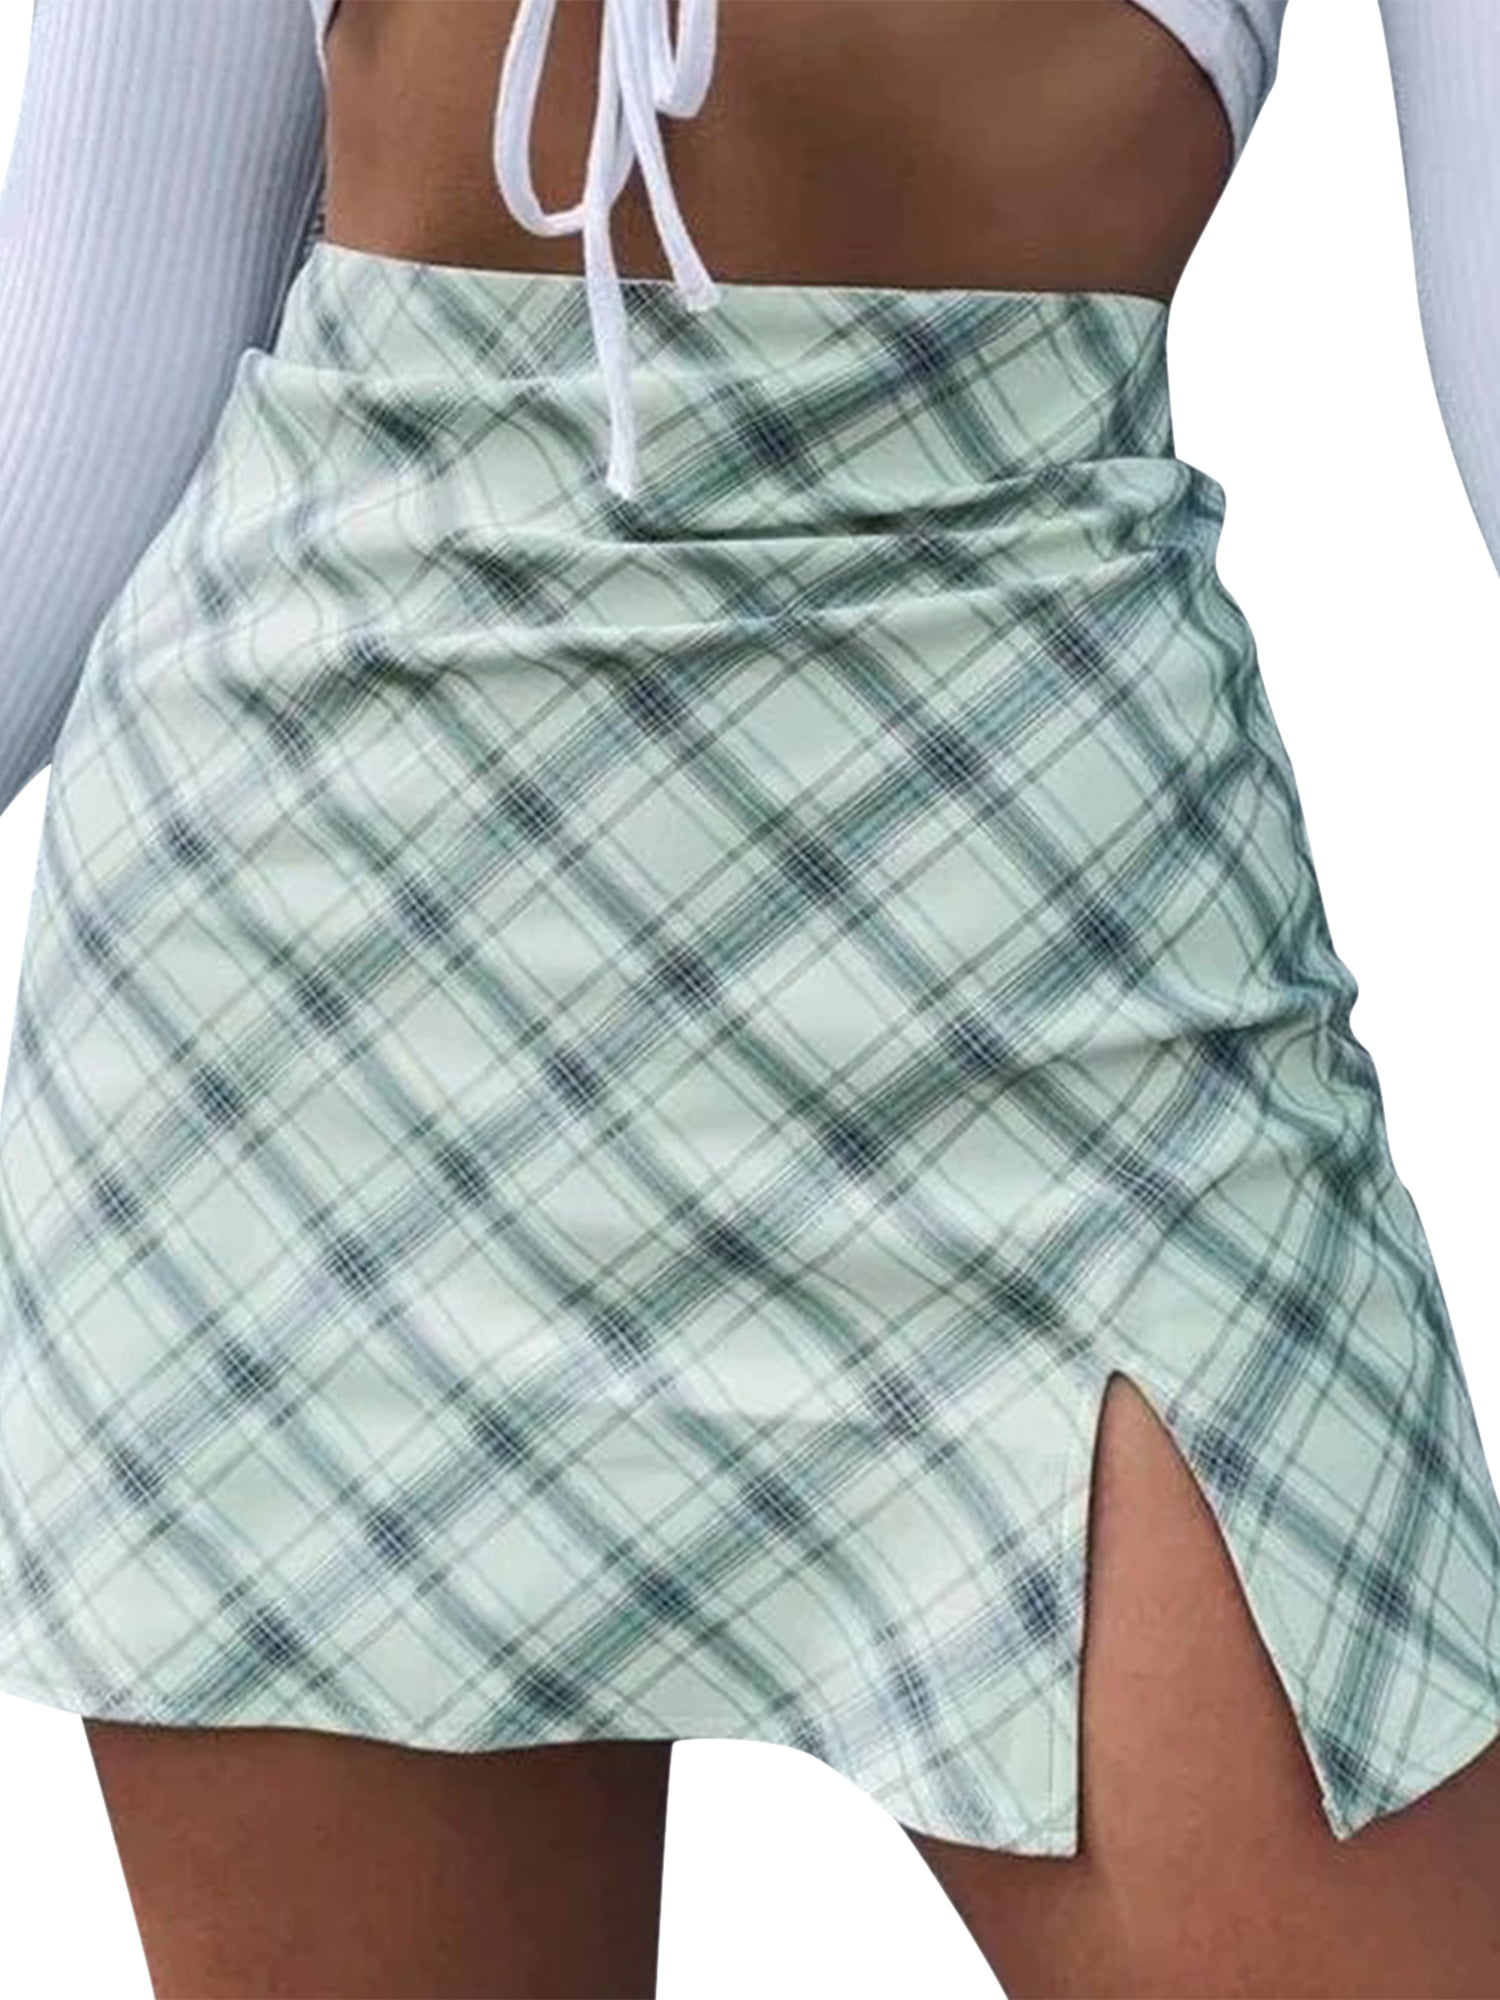 Women Basic Plaid Skirt Split High Waist Bodycon Mini Skirt with Under Shorts